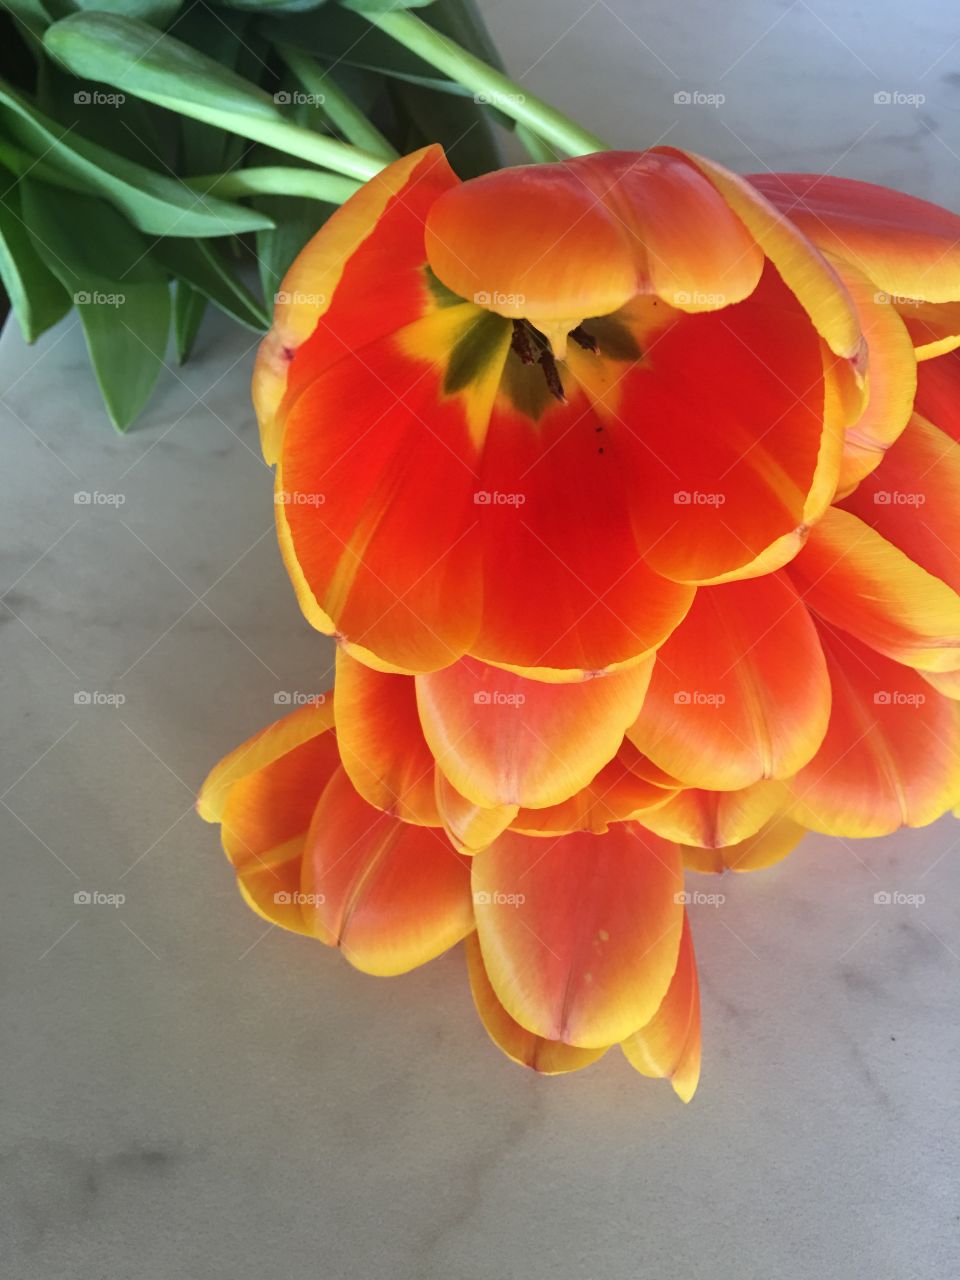 Orange tulips to welcome the spring season.